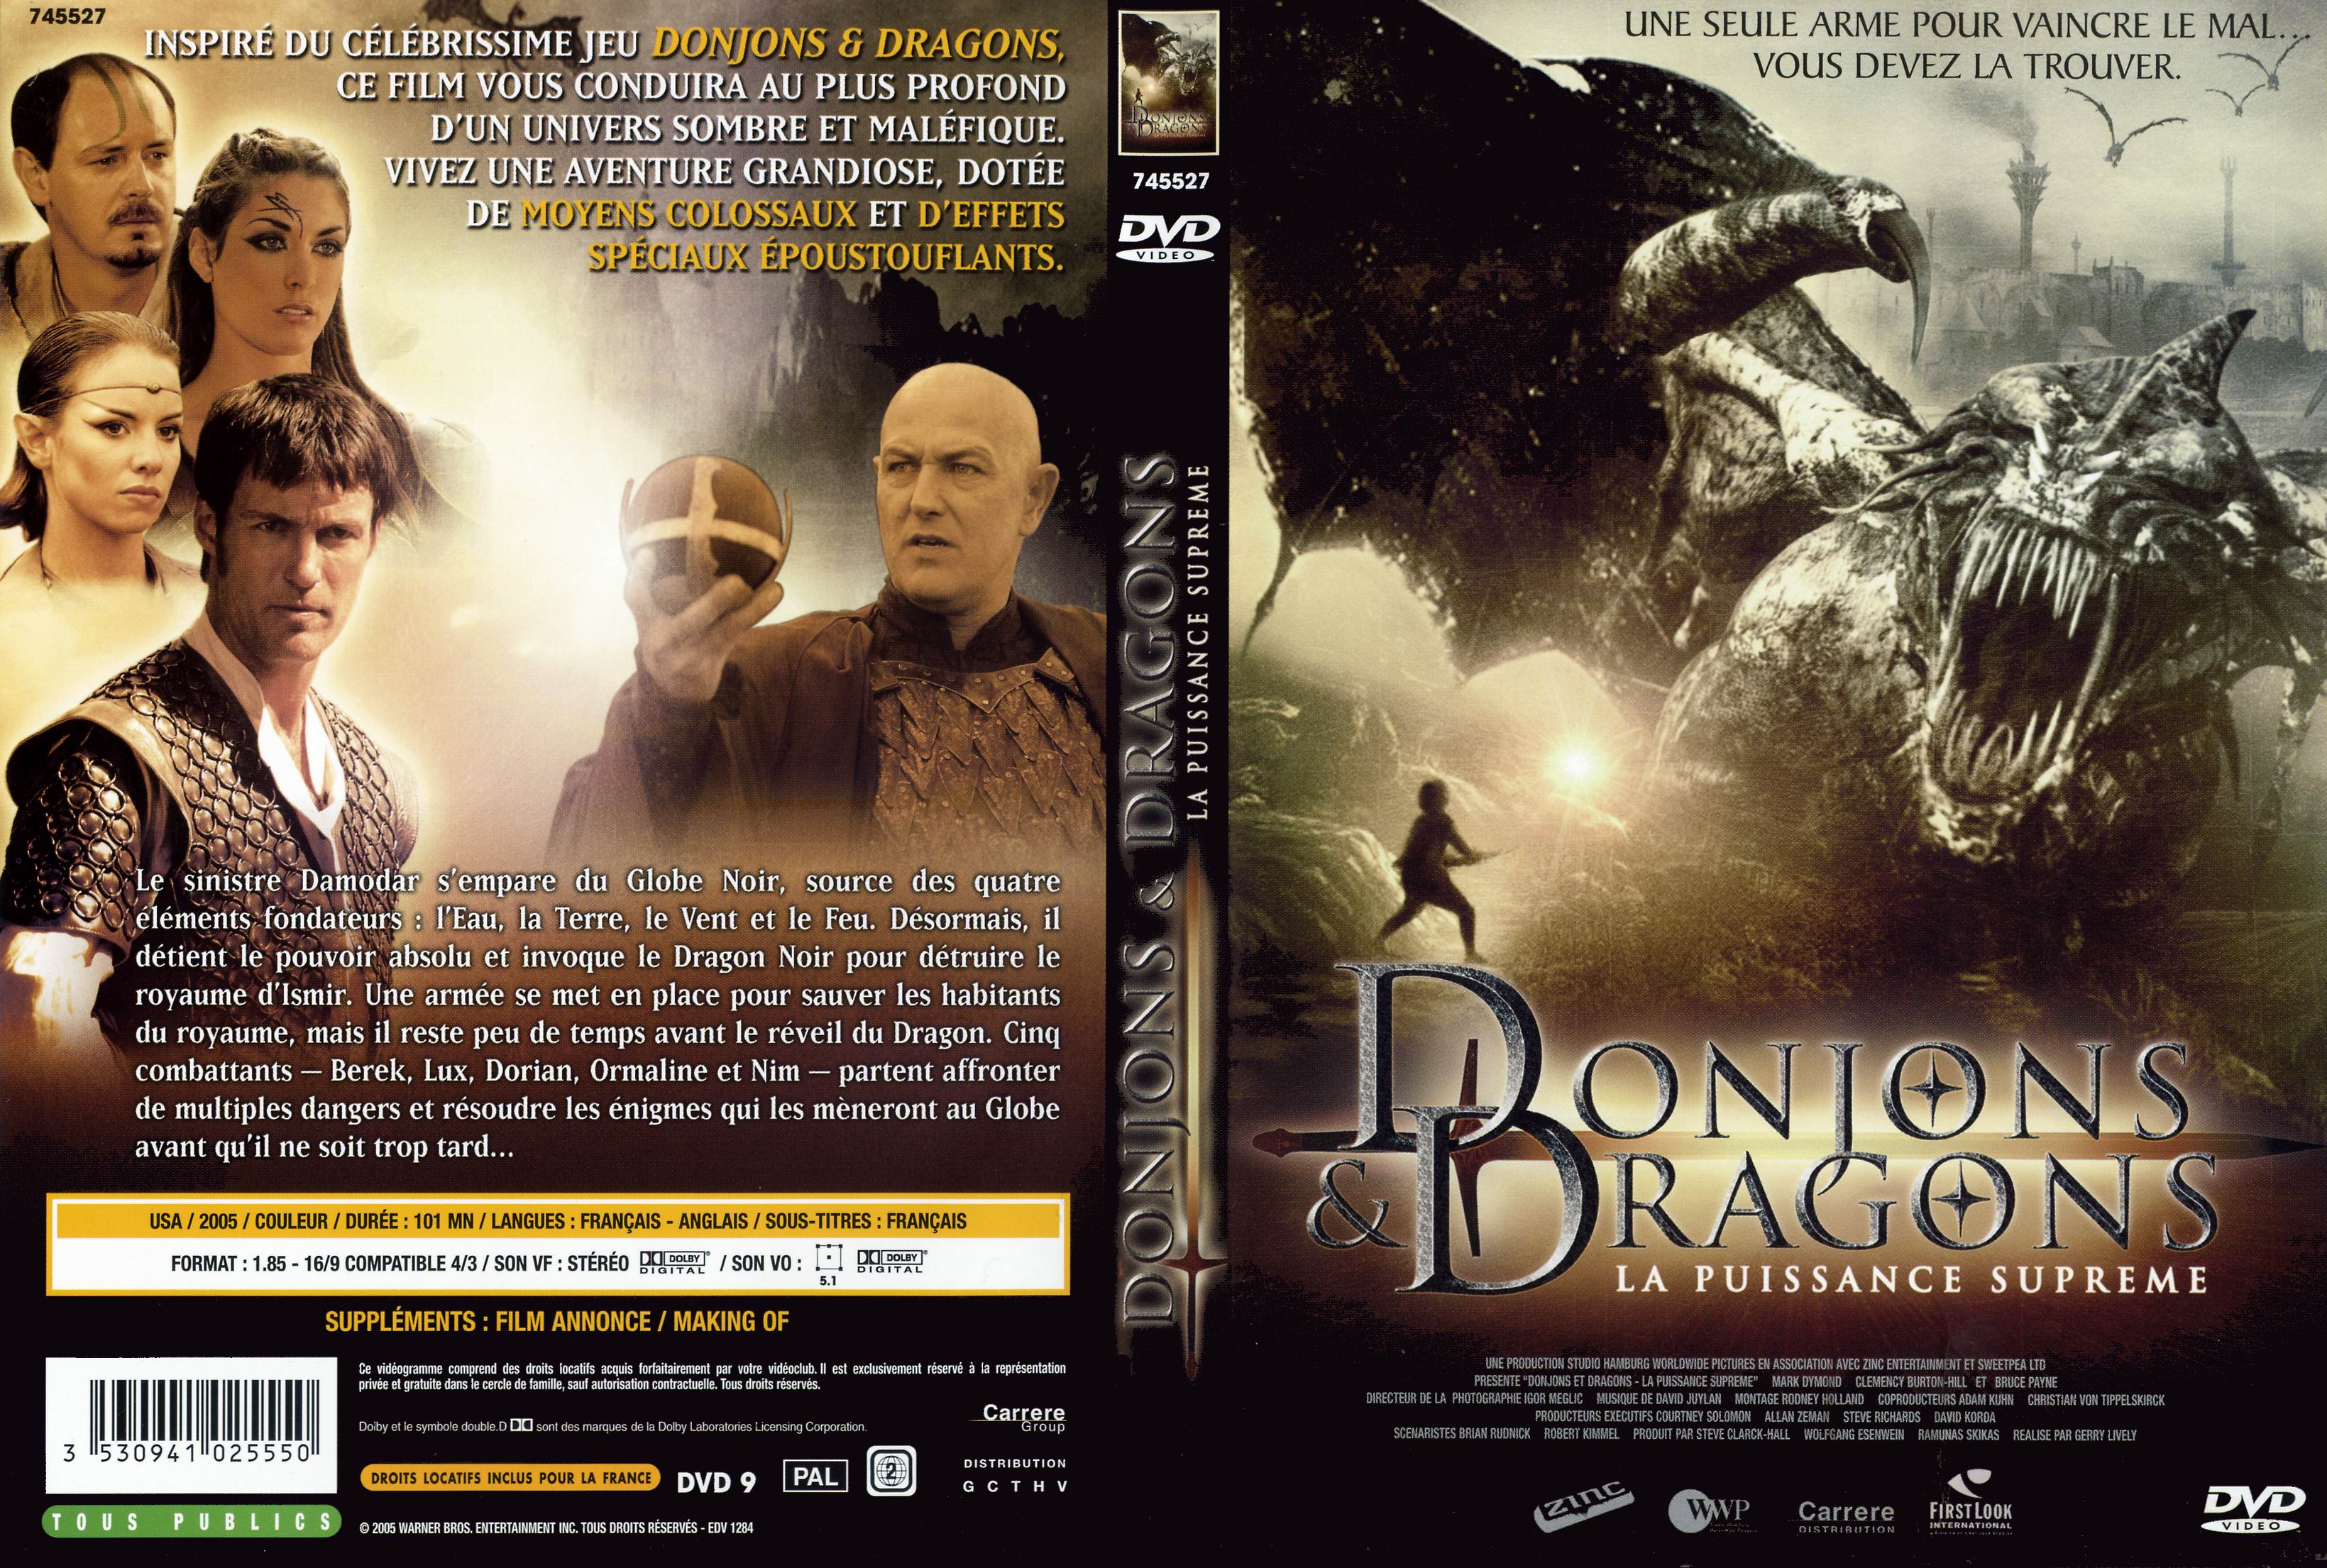 Jaquette DVD Donjons et dragons 2